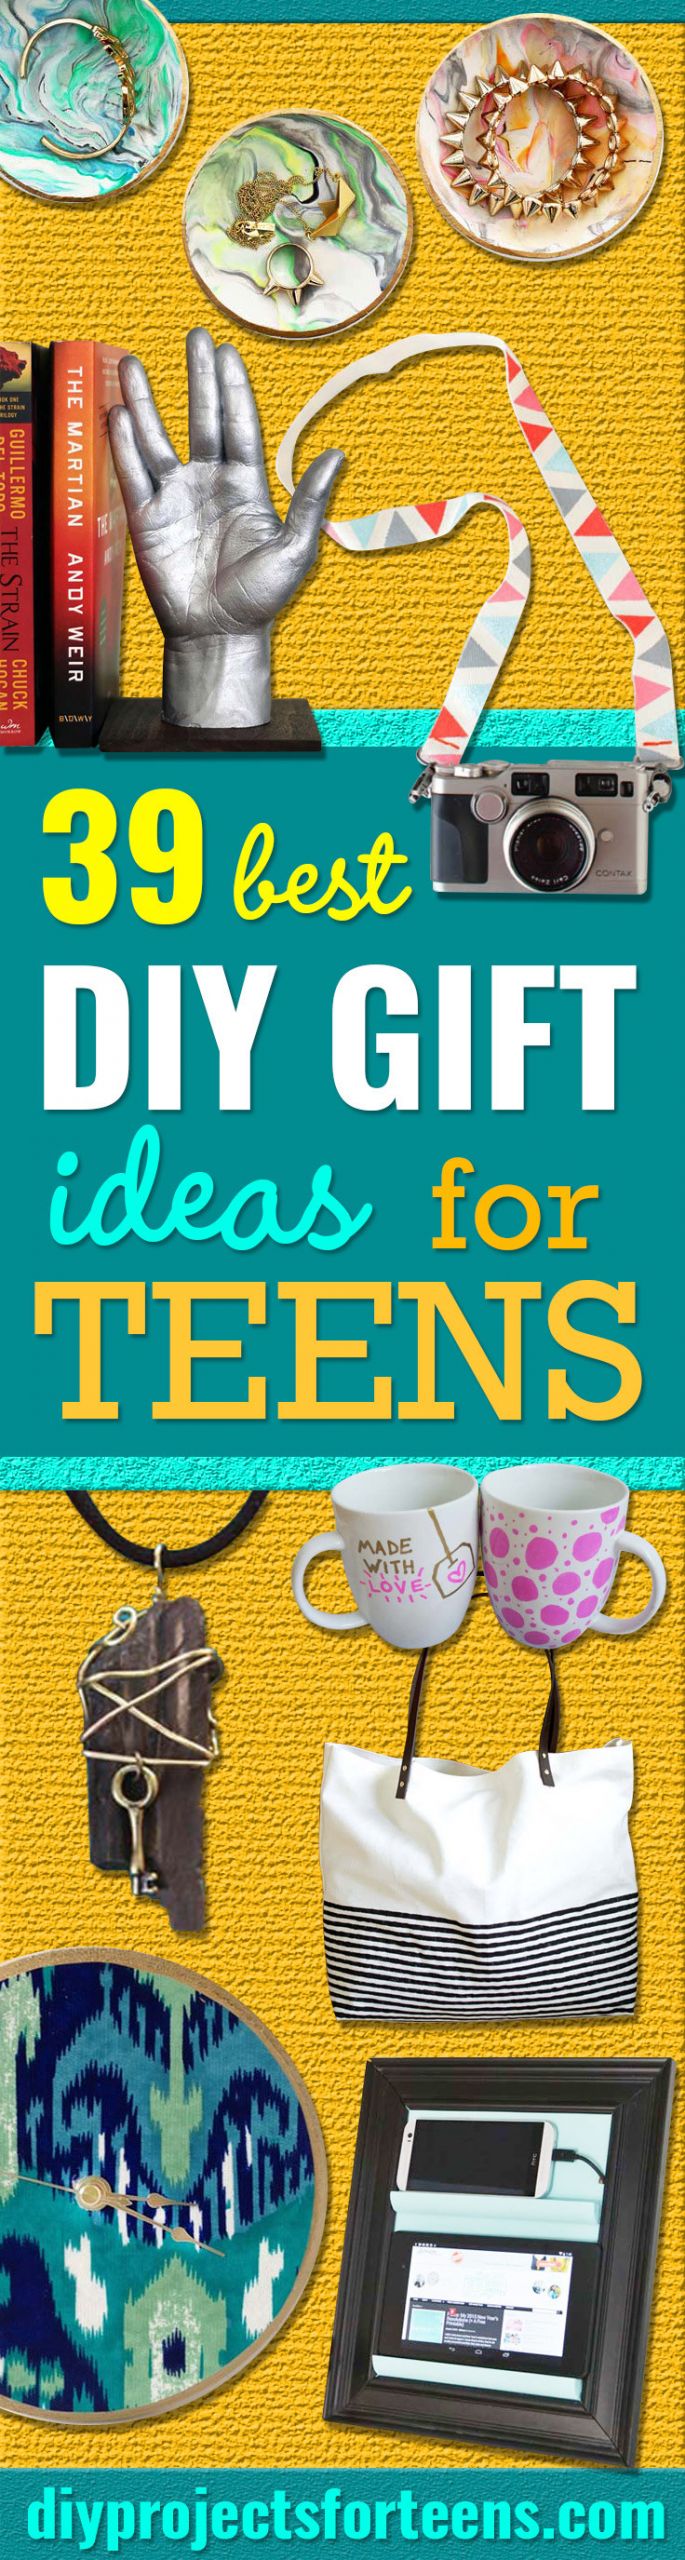 Best DIY Gifts
 39 Best DIY Gift Ideas For Teens